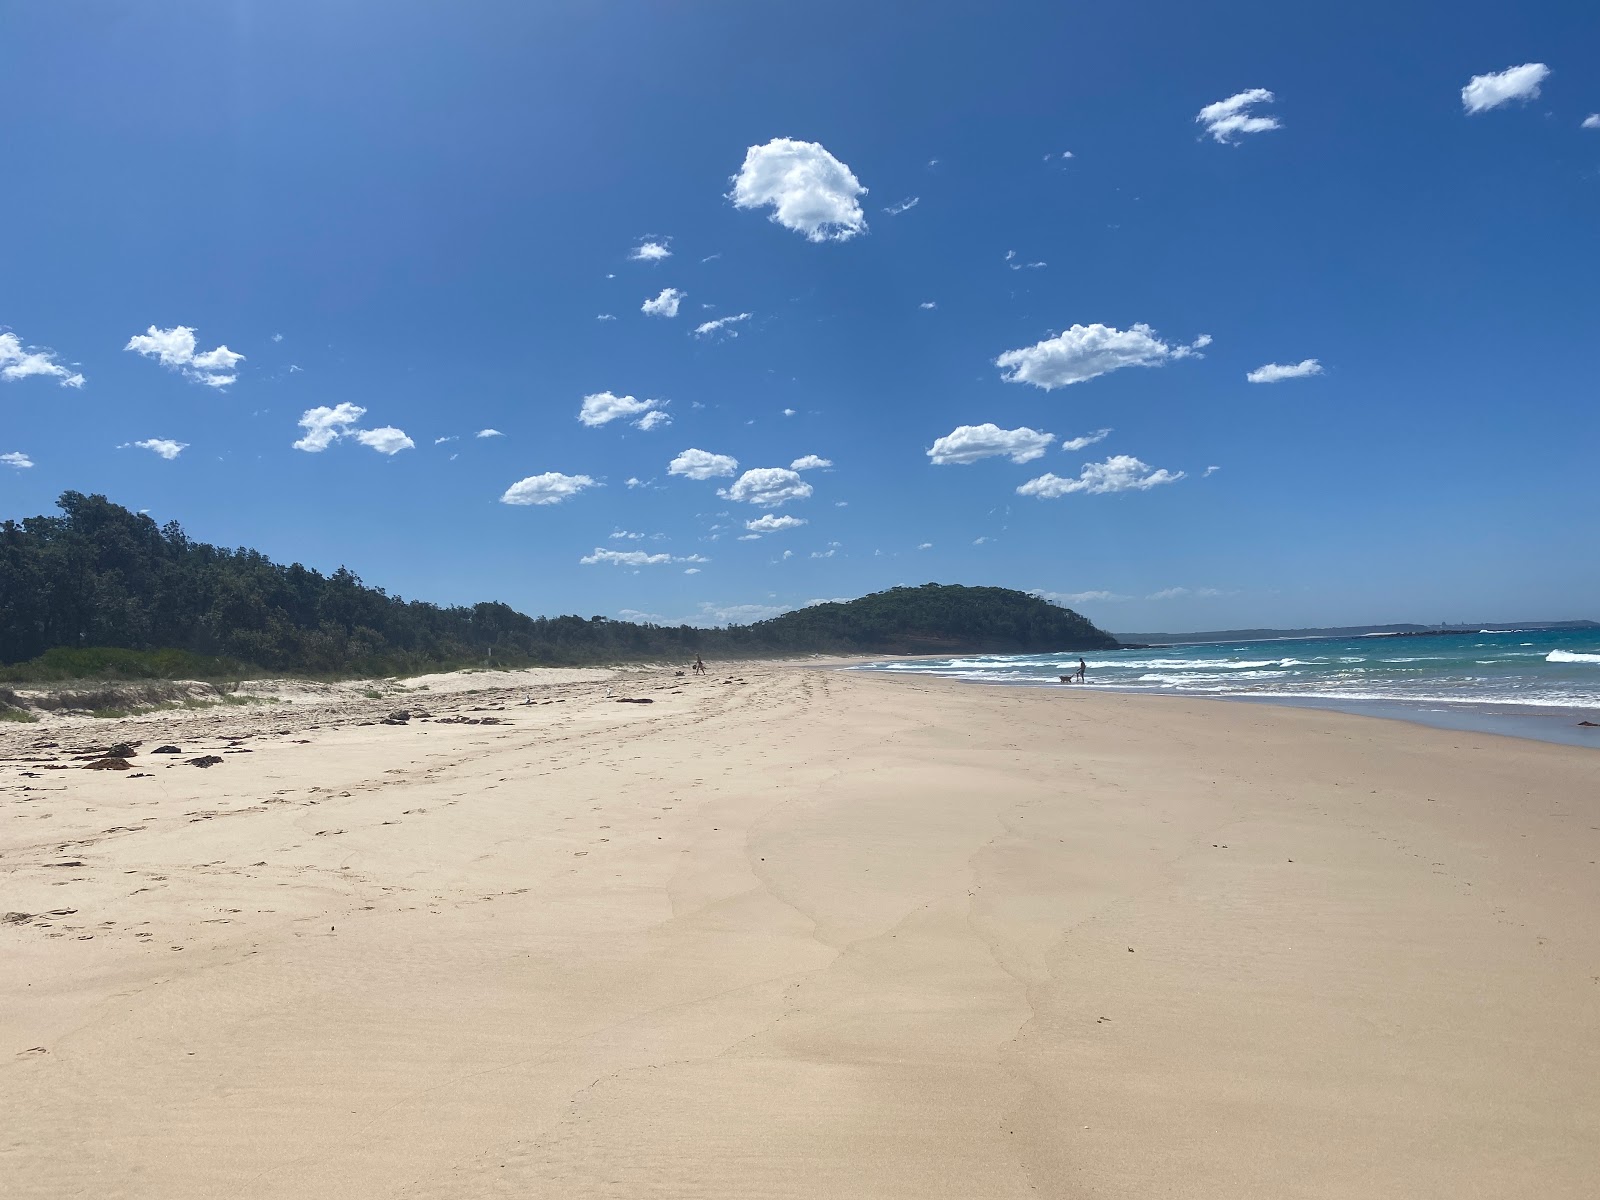 Foto di Narrawallee Beach ubicato in zona naturale